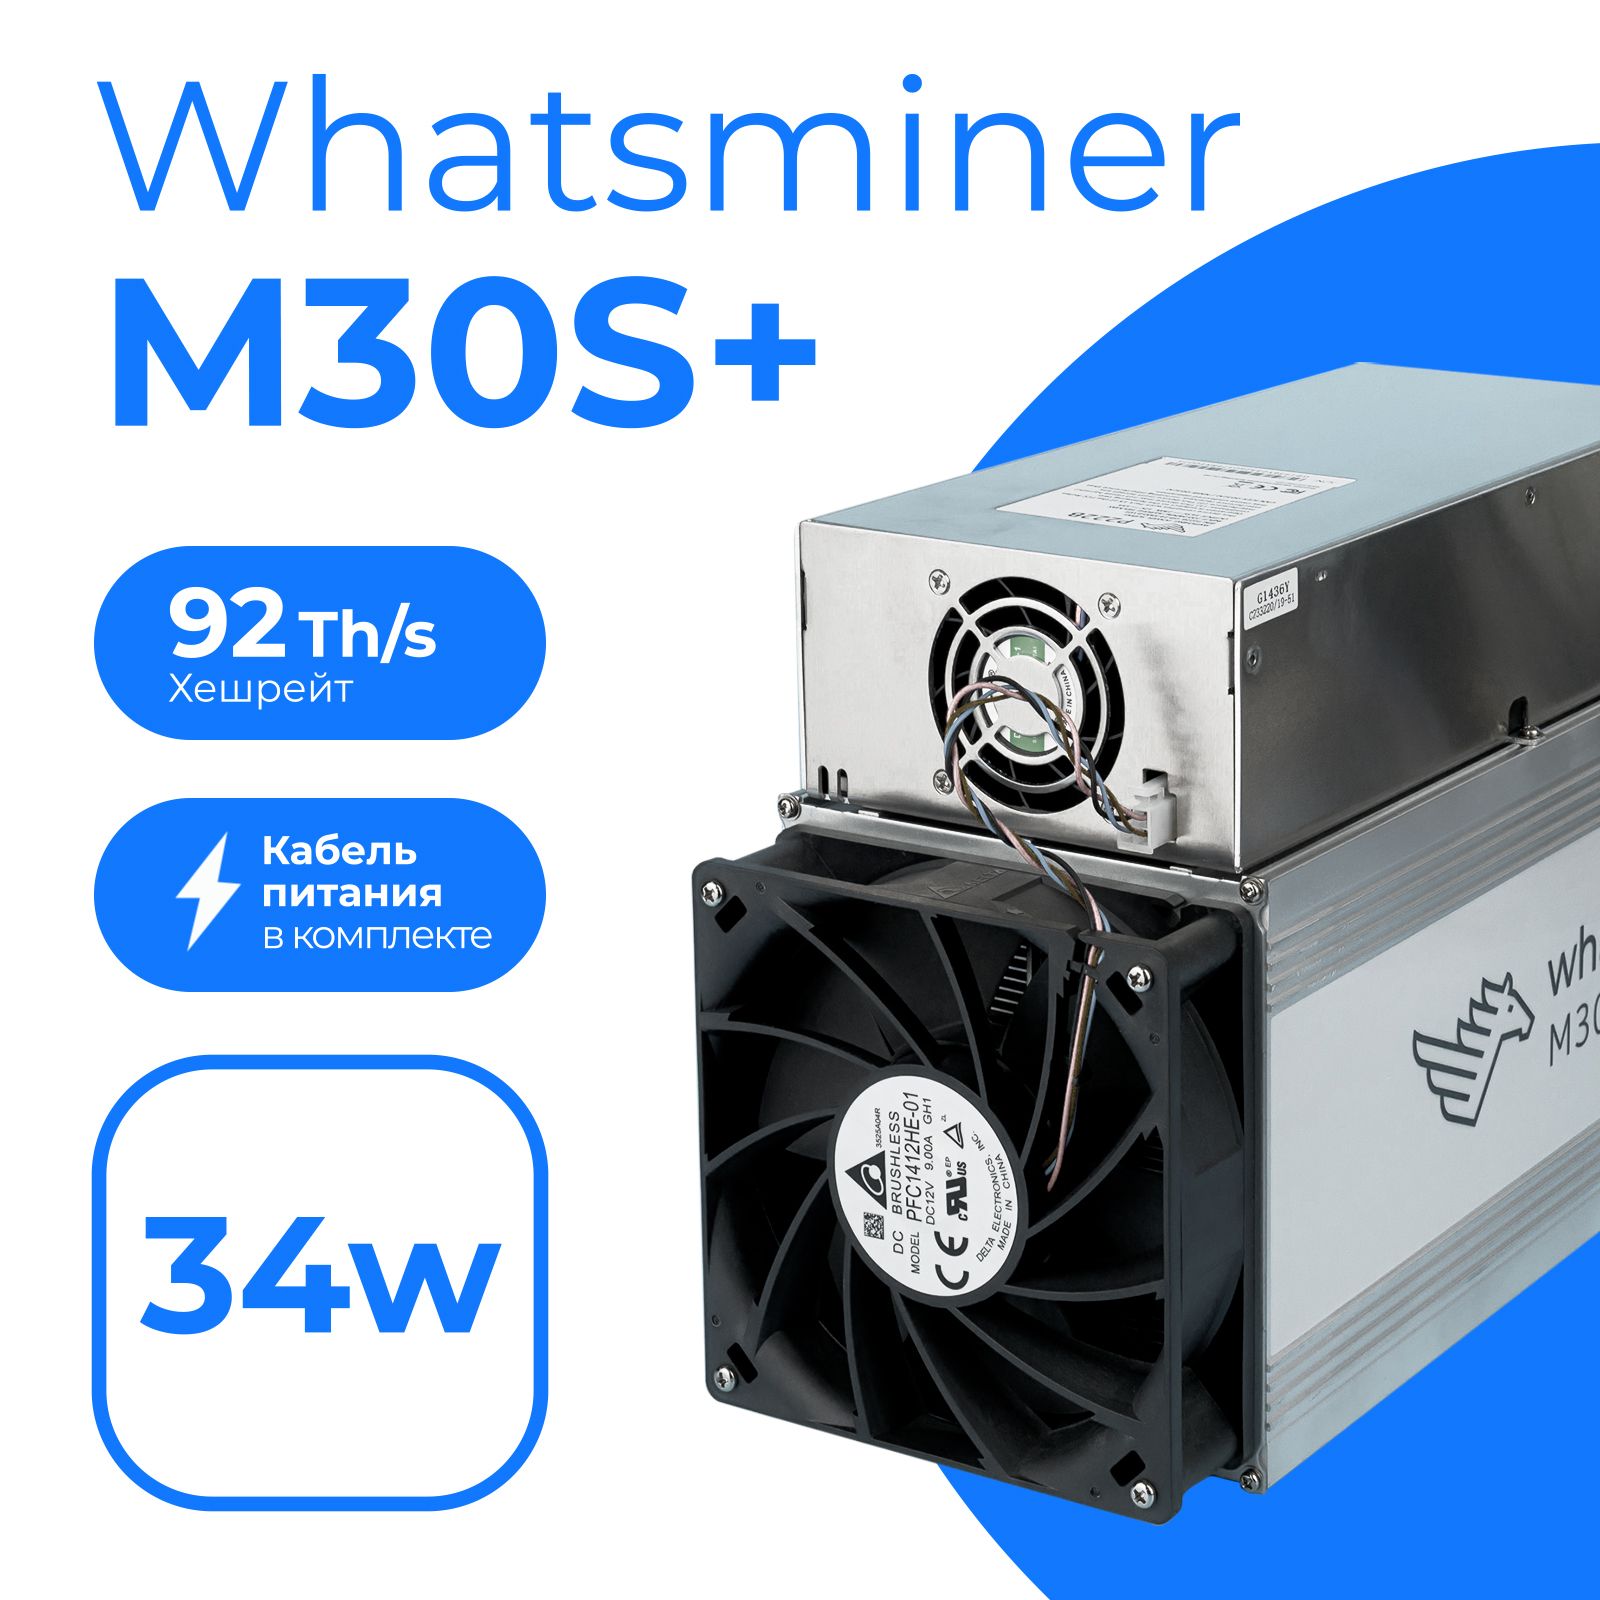 Асикмайнер(asicminer)WhatsminerM30S+92TH/s(34W)длямайнингакриптовалюты+кабельвкомплекте!